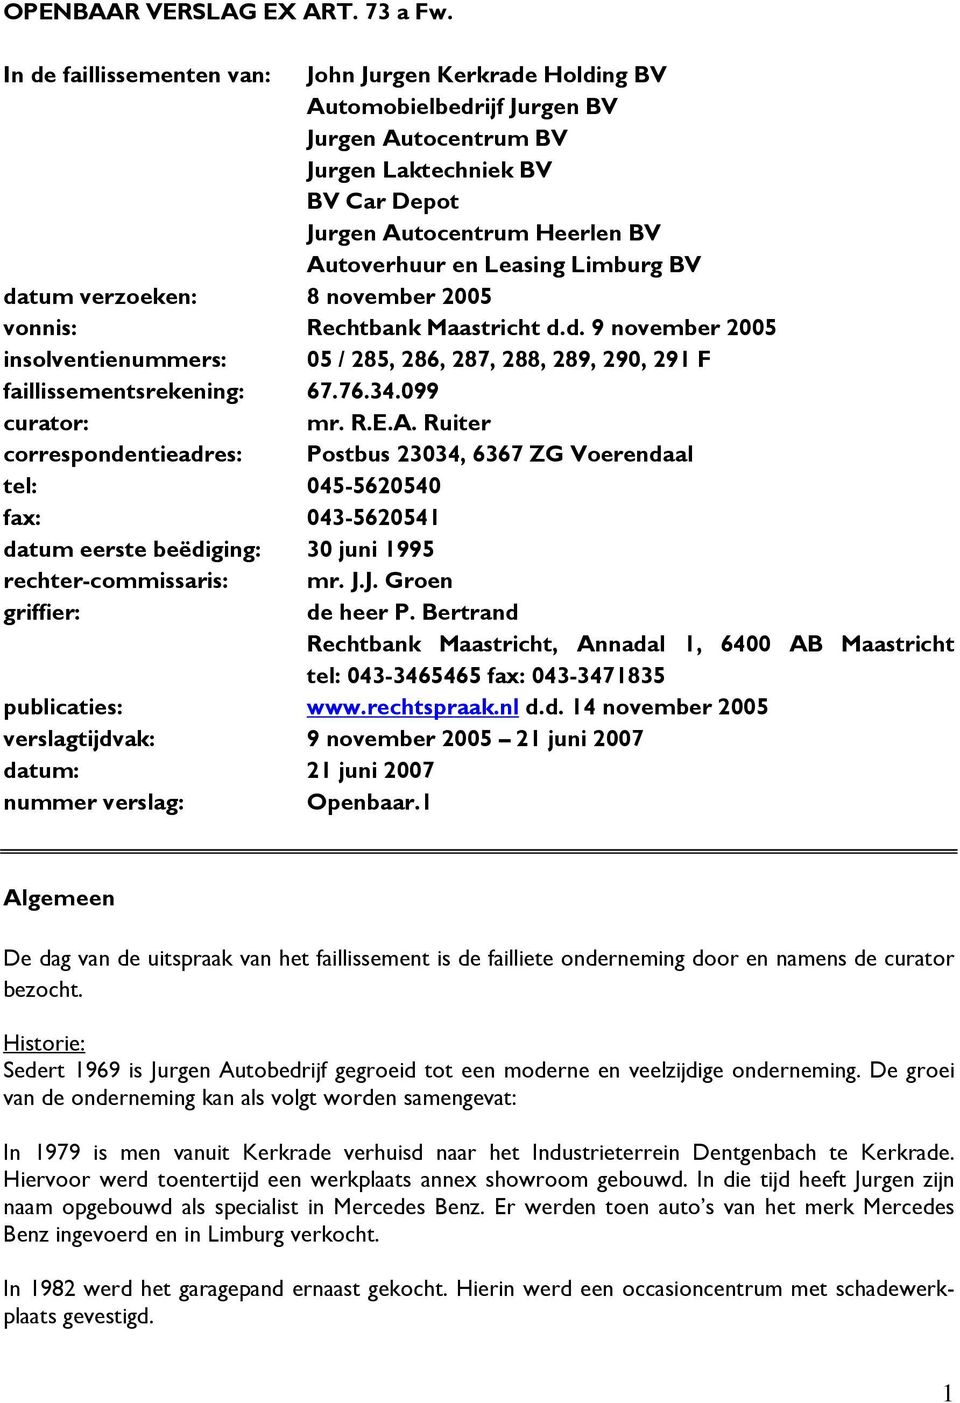 Limburg BV datum verzoeken: 8 november 2005 vonnis: Rechtbank Maastricht d.d. 9 november 2005 insolventienummers: 05 / 285, 286, 287, 288, 289, 290, 291 F faillissementsrekening: 67.76.34.